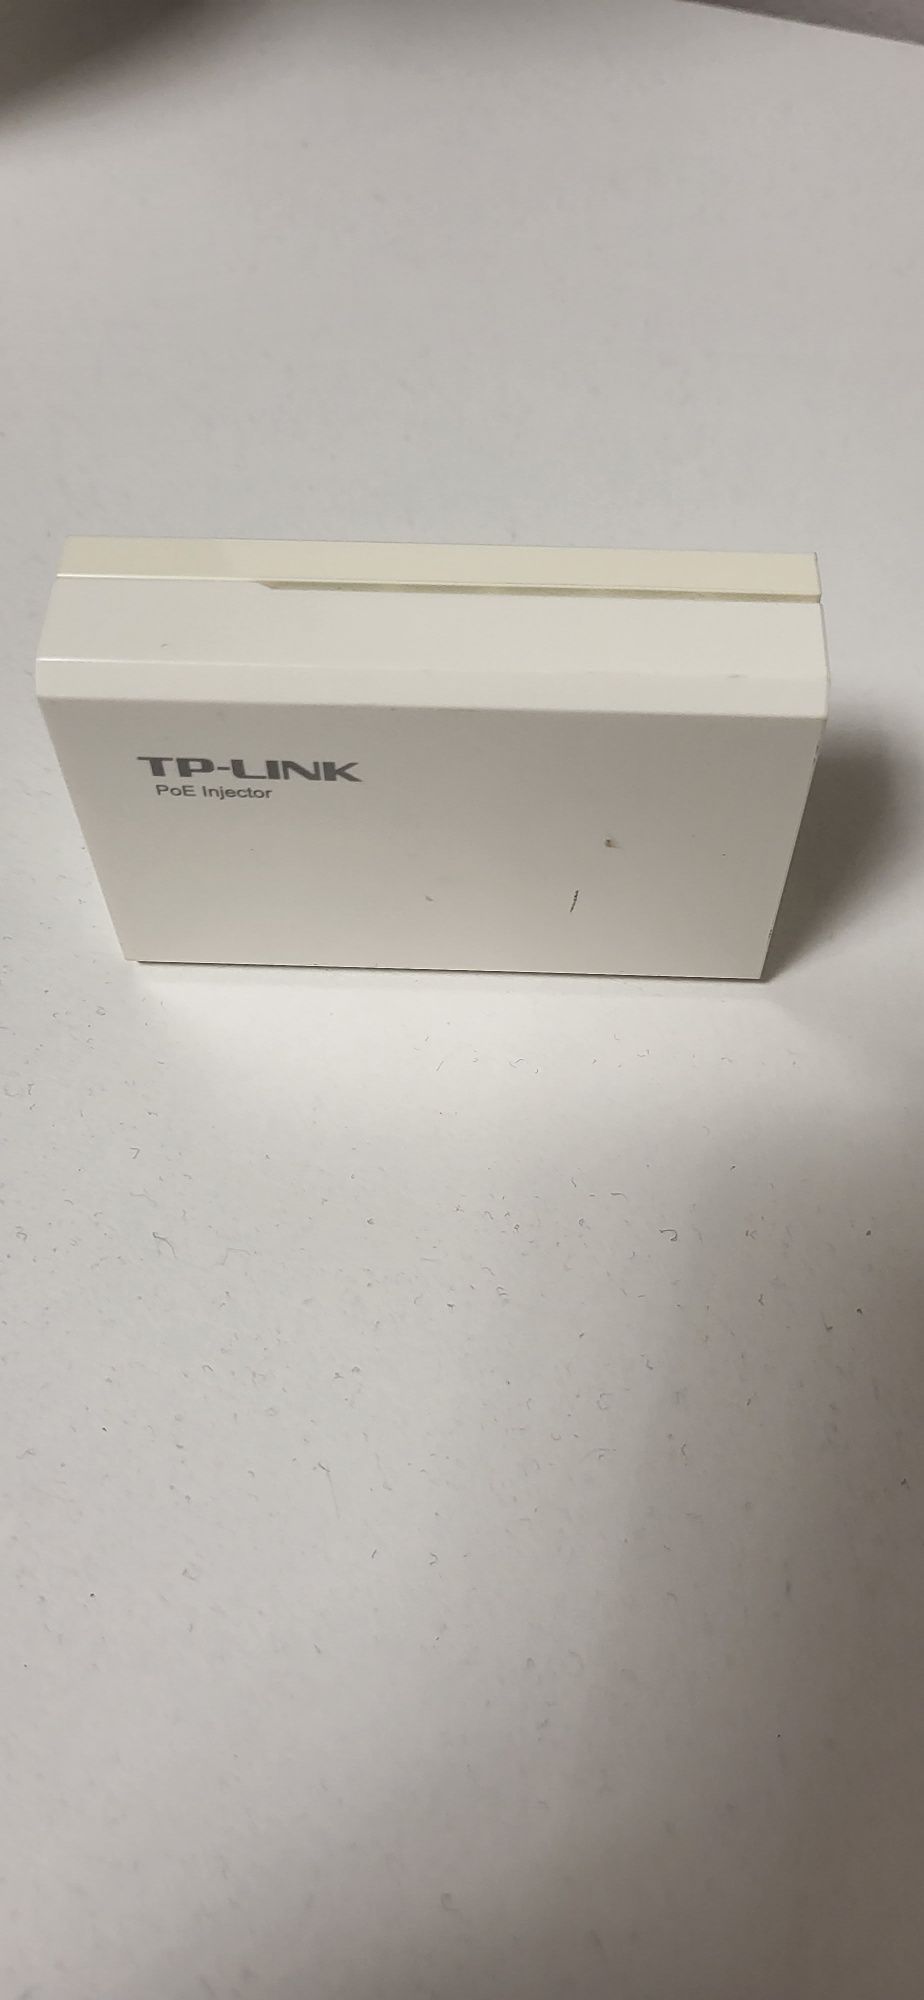 TP-LINK  poE injector